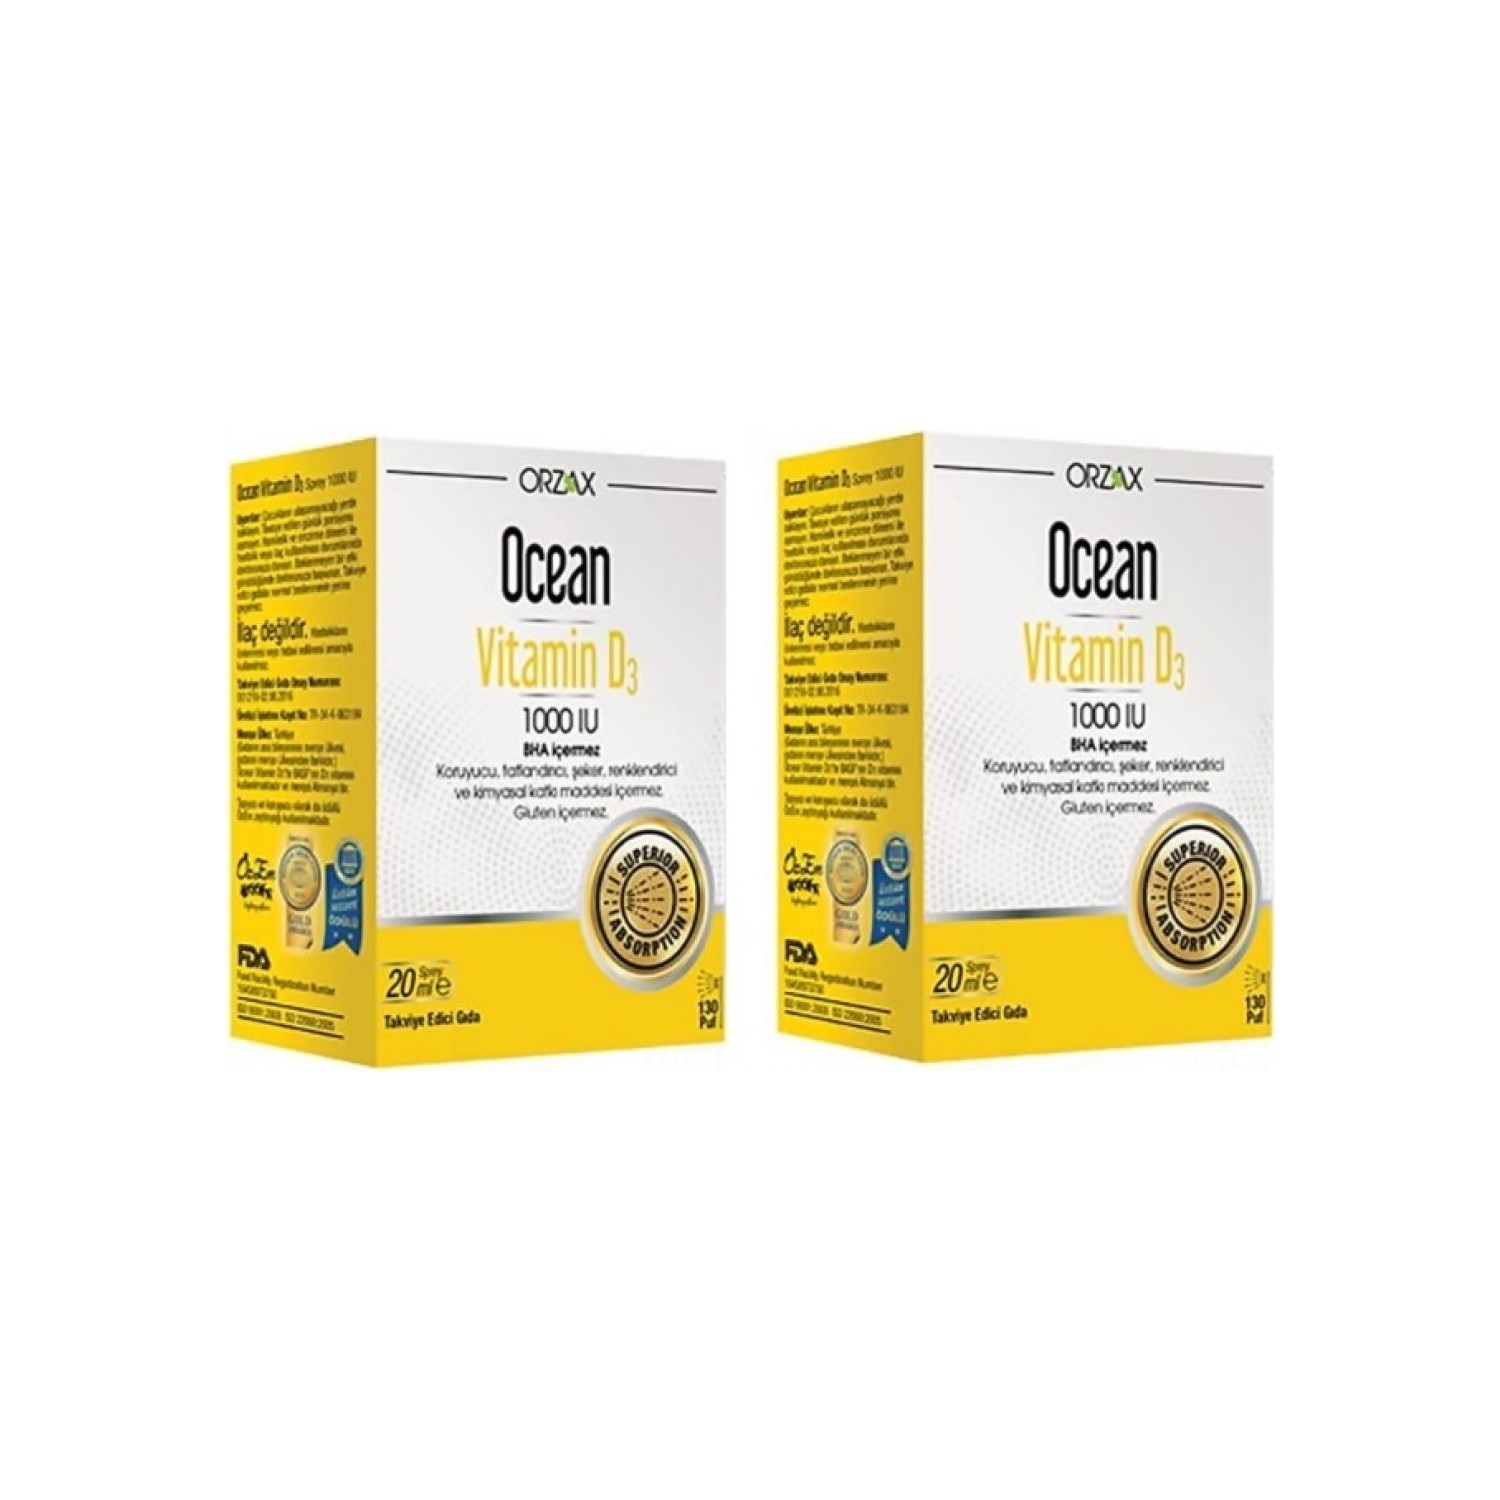 Витамин D3 Orzax Ocean 1000 МЕ, 2 упаковки по 20 мл витамин c 30 таблеток и витамин d3 1000 ме спрей ocean 20 мл